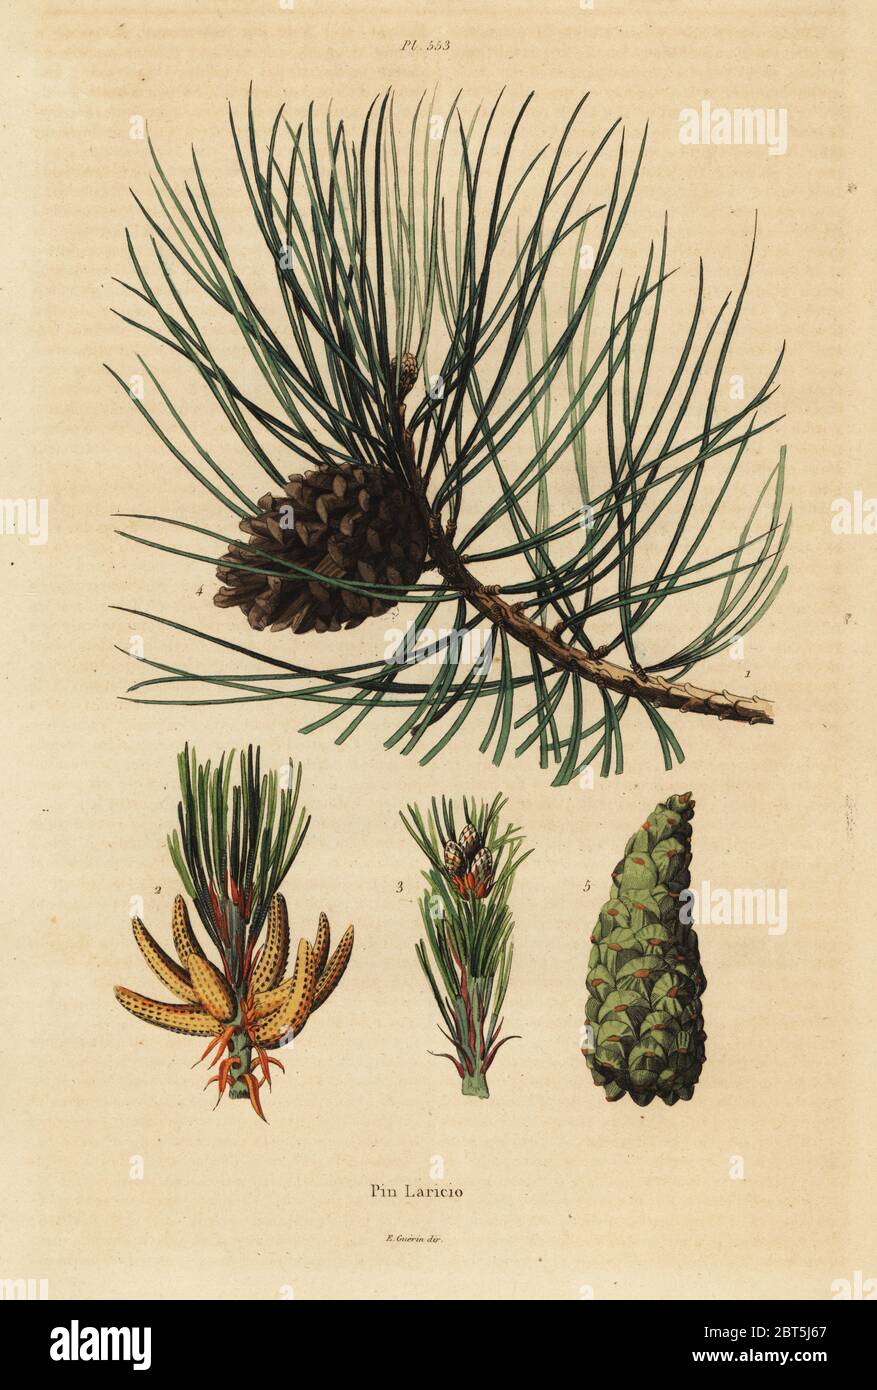 Corsican pine tree, Pinus nigra subsp. laricio. Pin Laricio. Handcoloured steel engraving from Felix-Edouard Guerin-Meneville's Dictionnaire Pittoresque d'Histoire Naturelle (Picturesque Dictionary of Natural History), Paris, 1834-39. Stock Photo